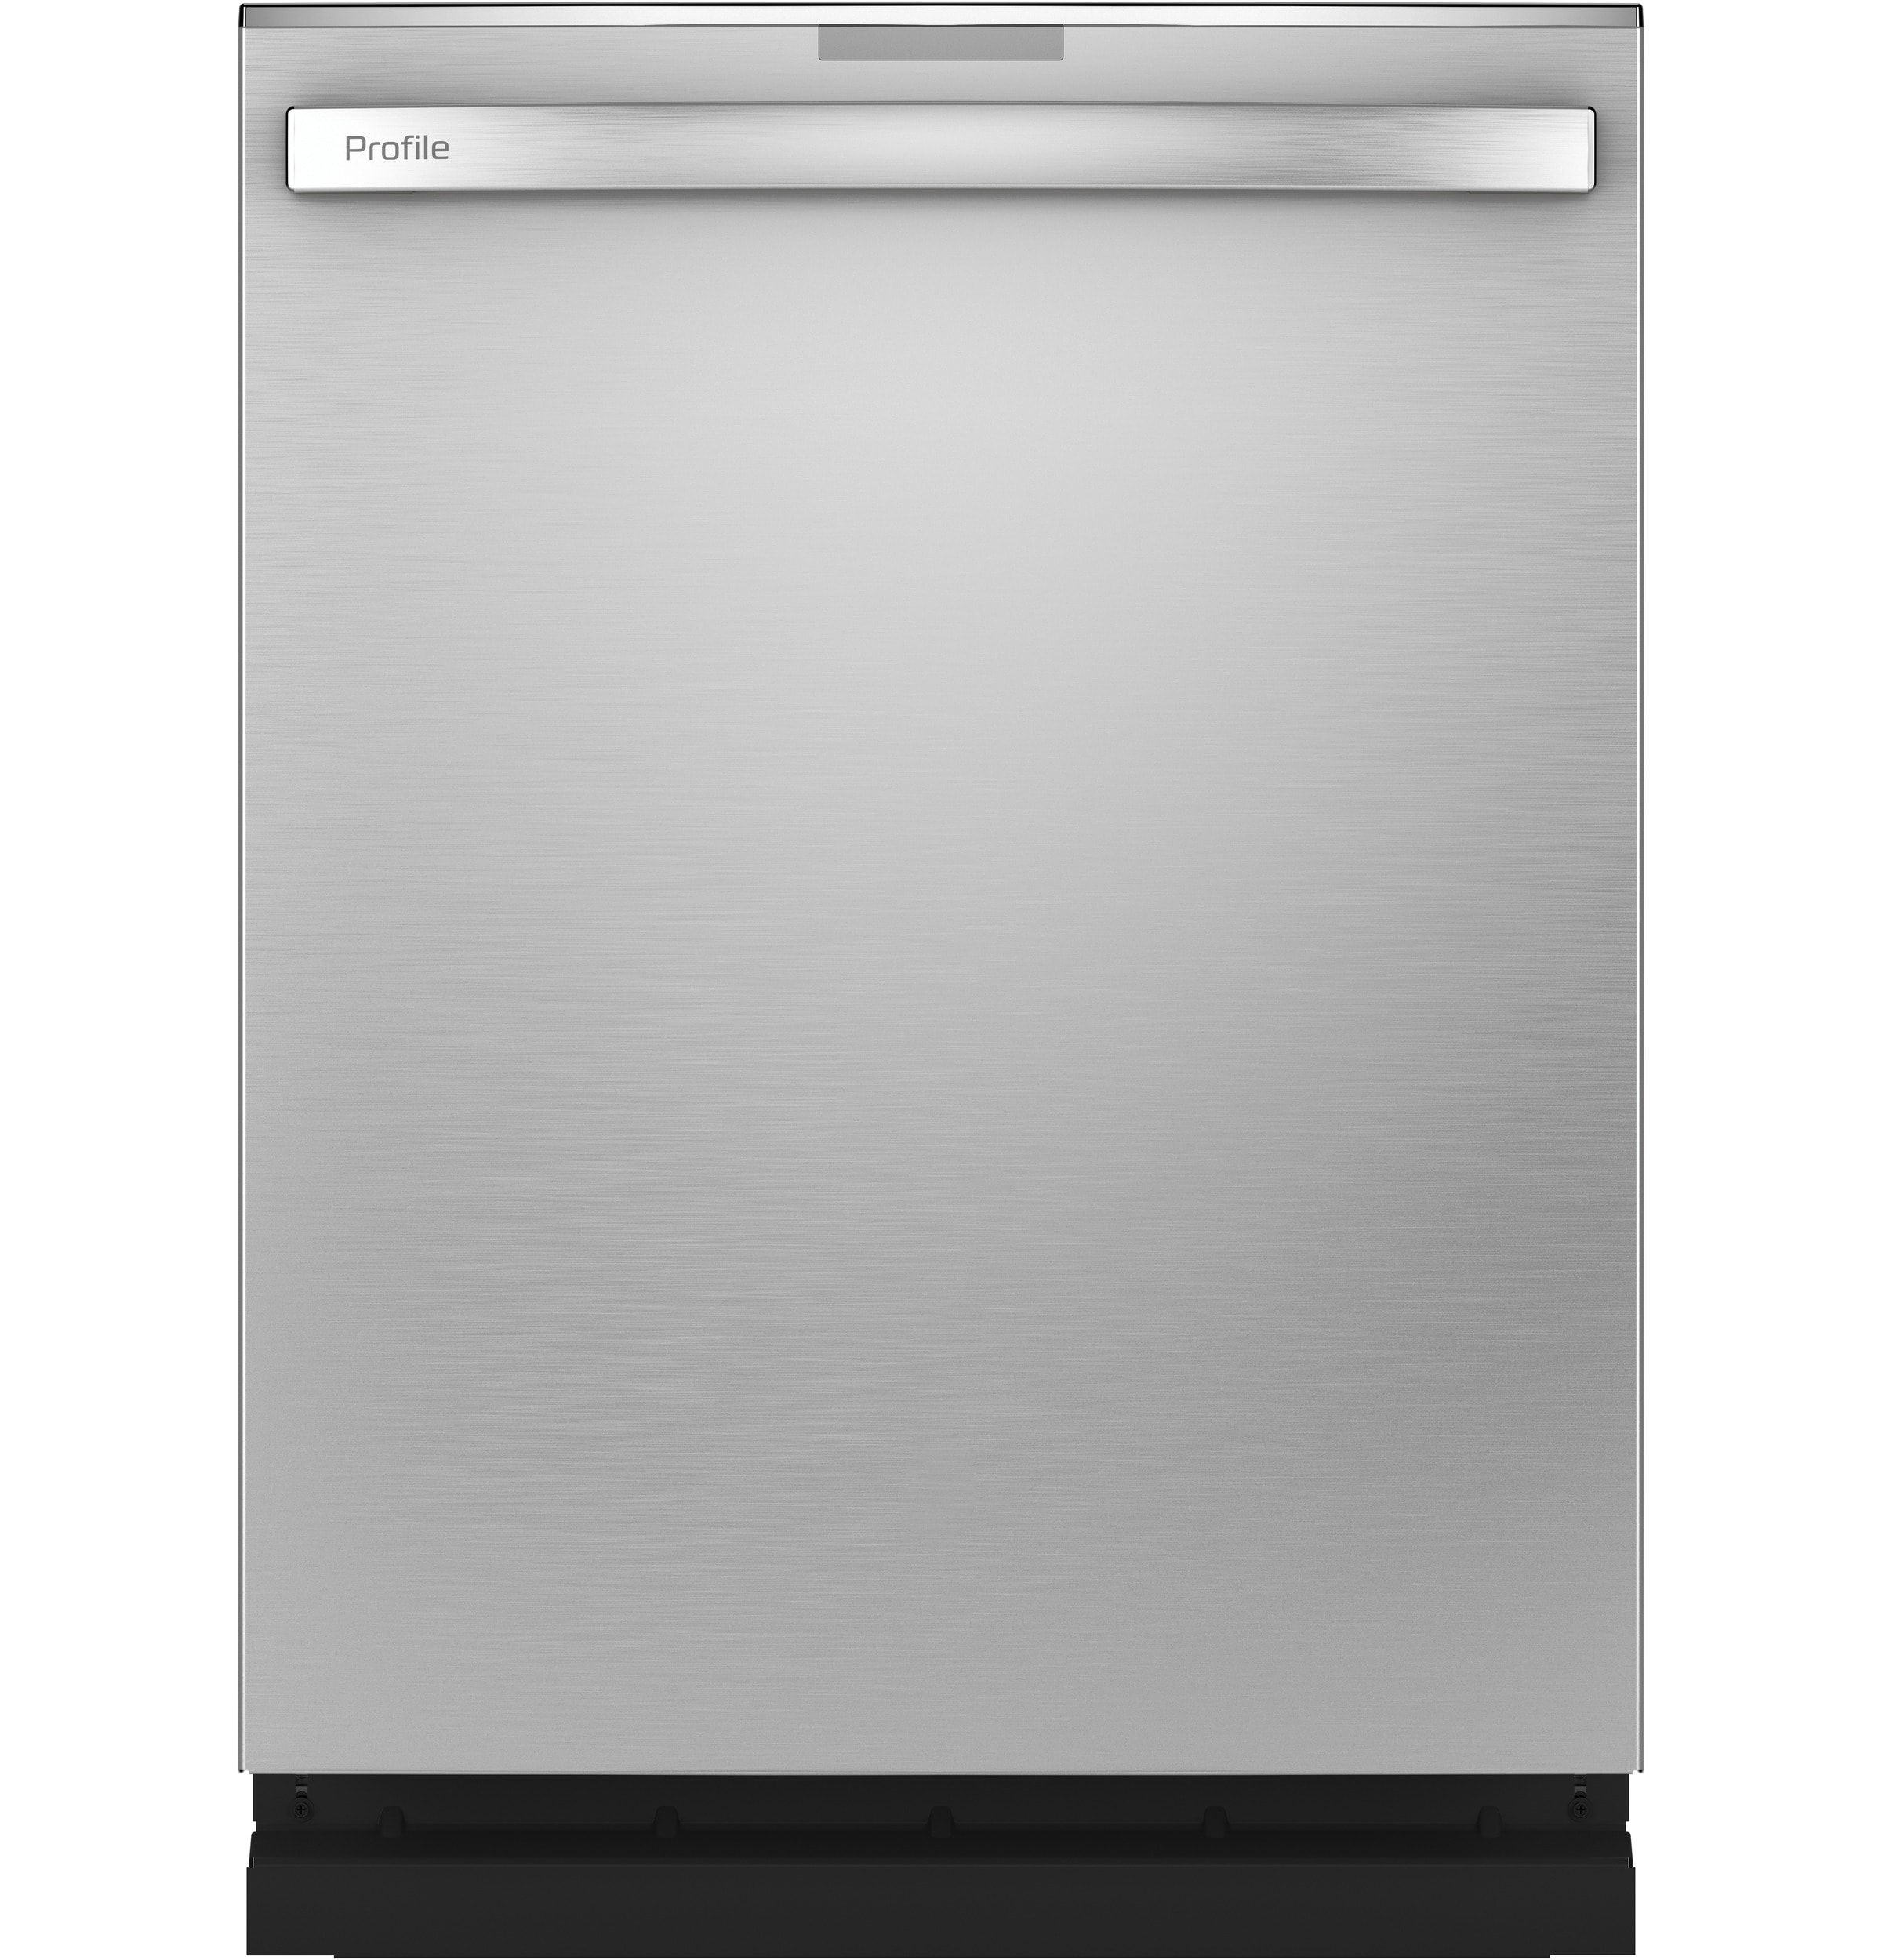 Is Stainless Steel Dishwasher Safe? - Kool8